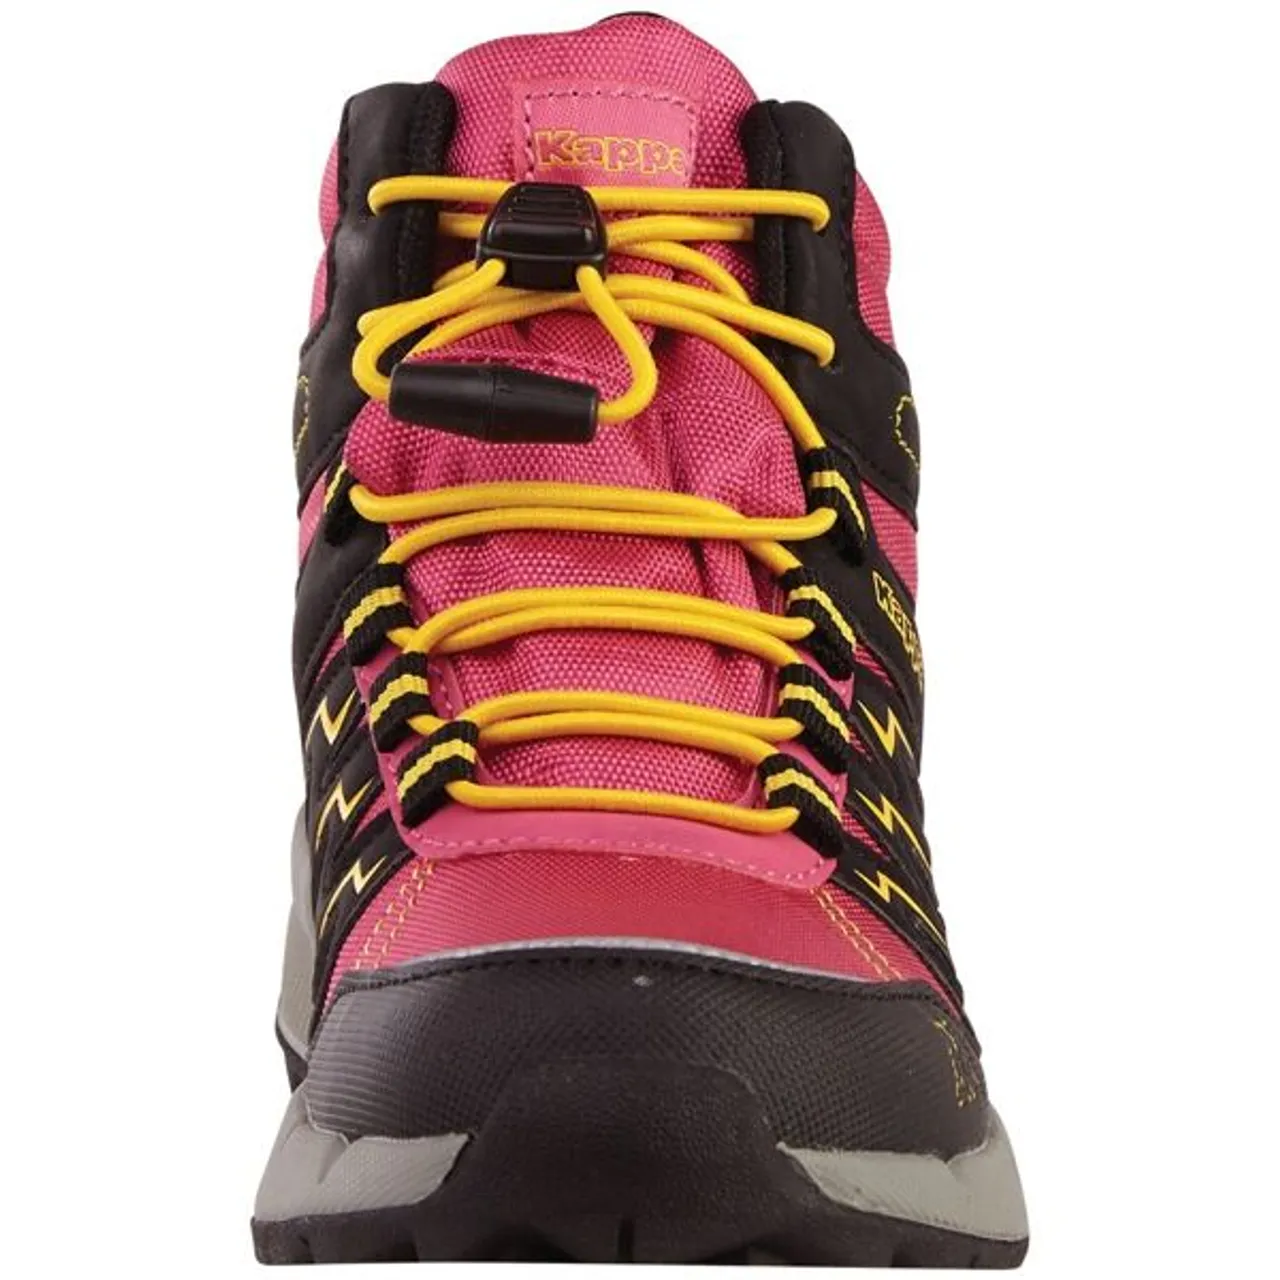 Sneaker KAPPA Gr. 37, bunt (pink, yellow) Kinder Schuhe